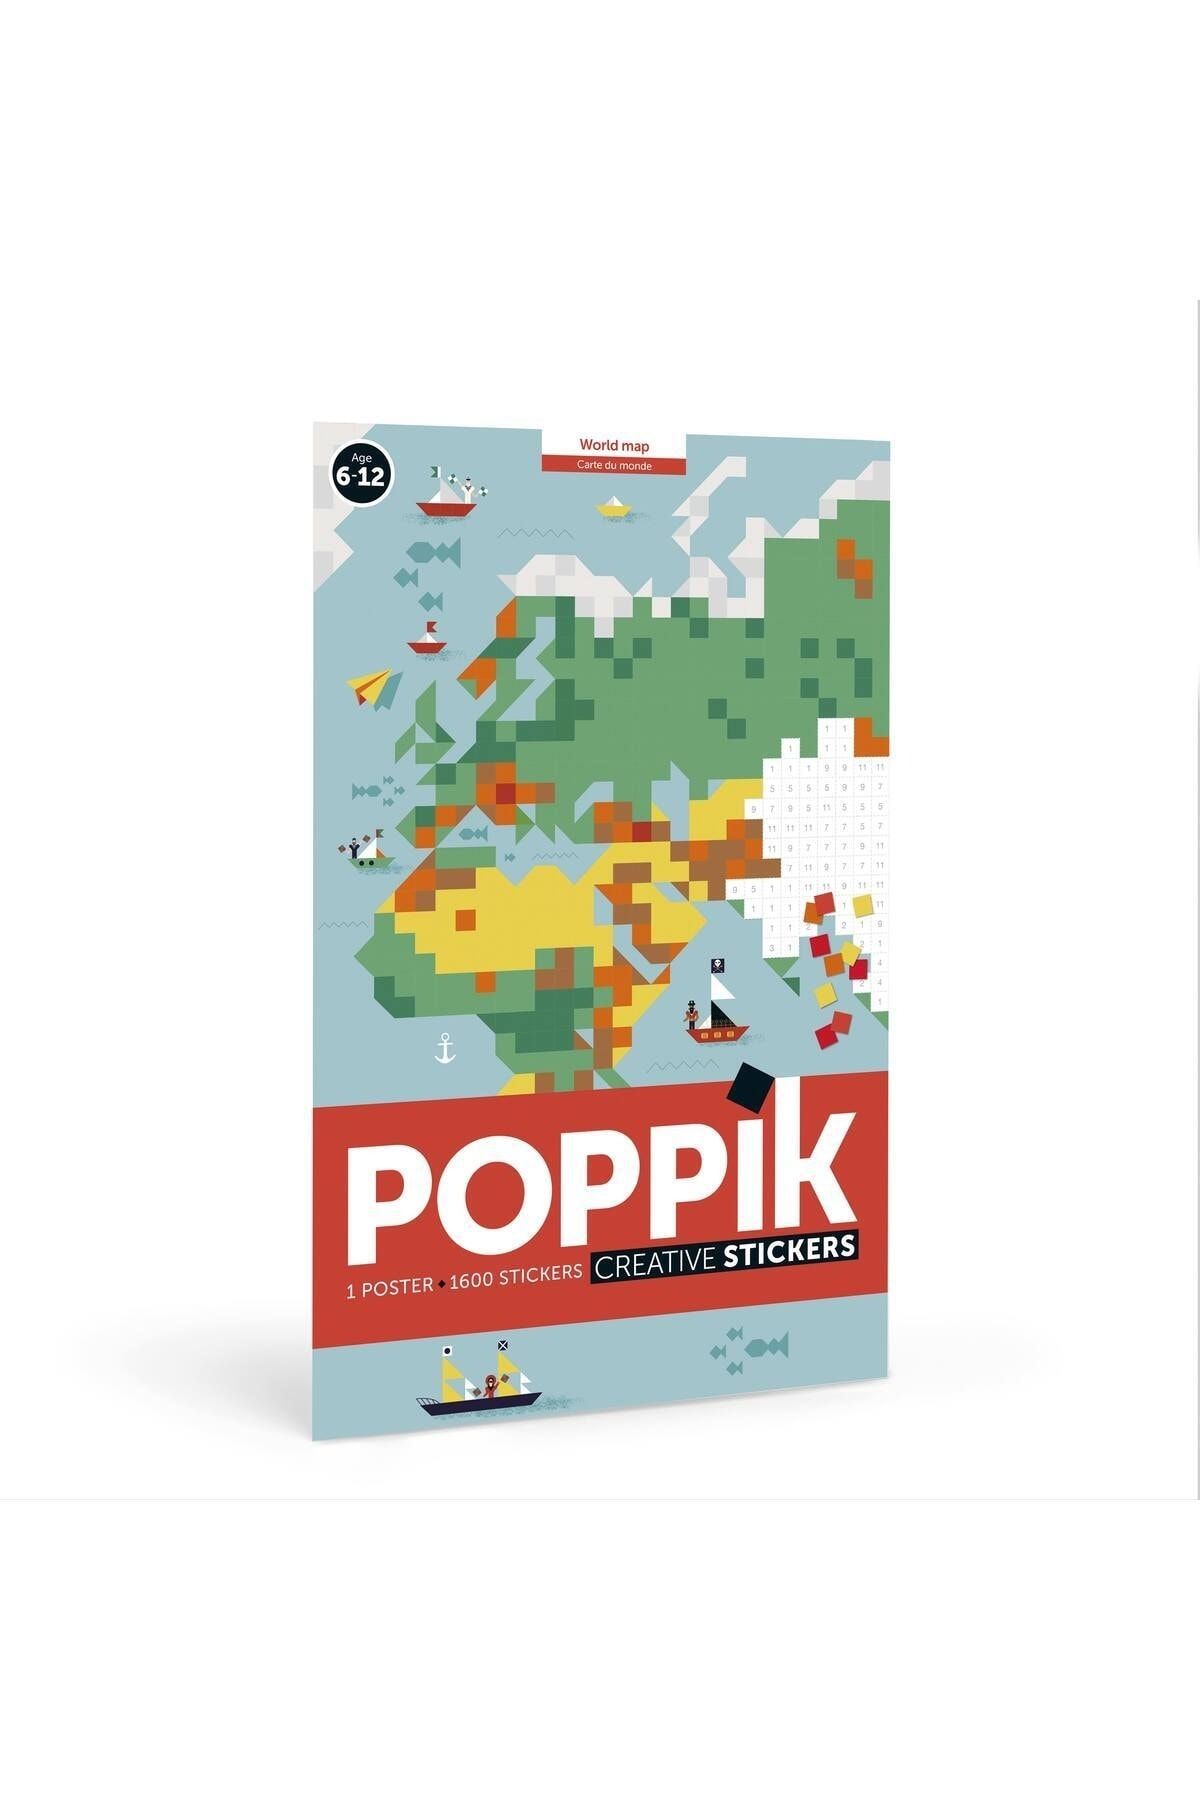 POPPIK CREATIVE POSTER + 1600 STICKERS
WORLD MAP